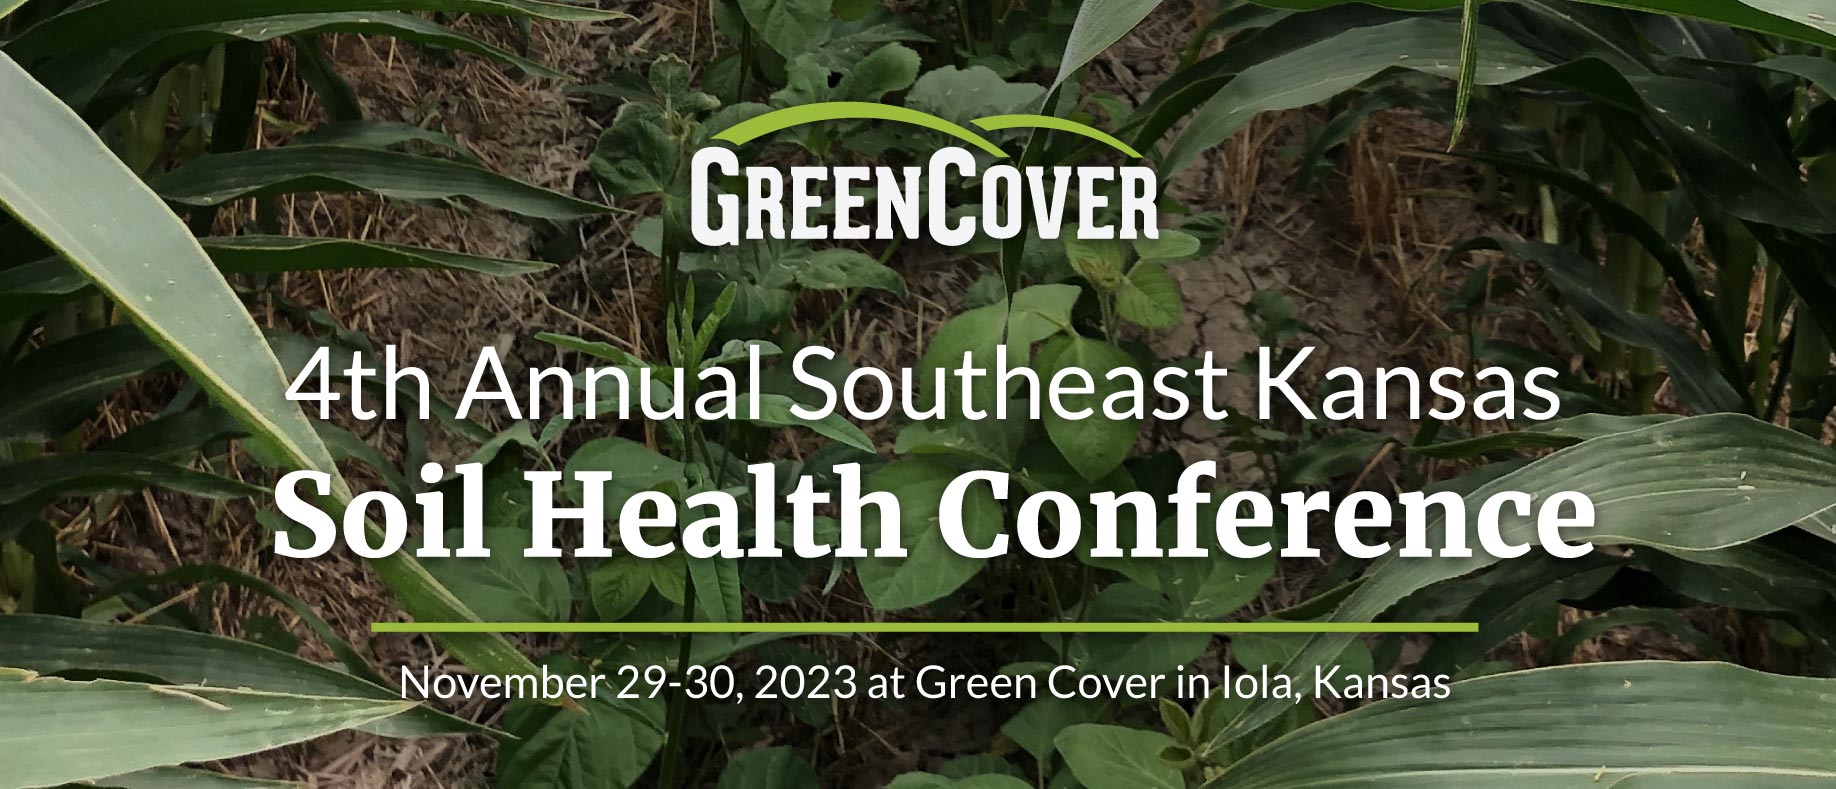 4th Annual Southeast Kansas Soil Health Conference